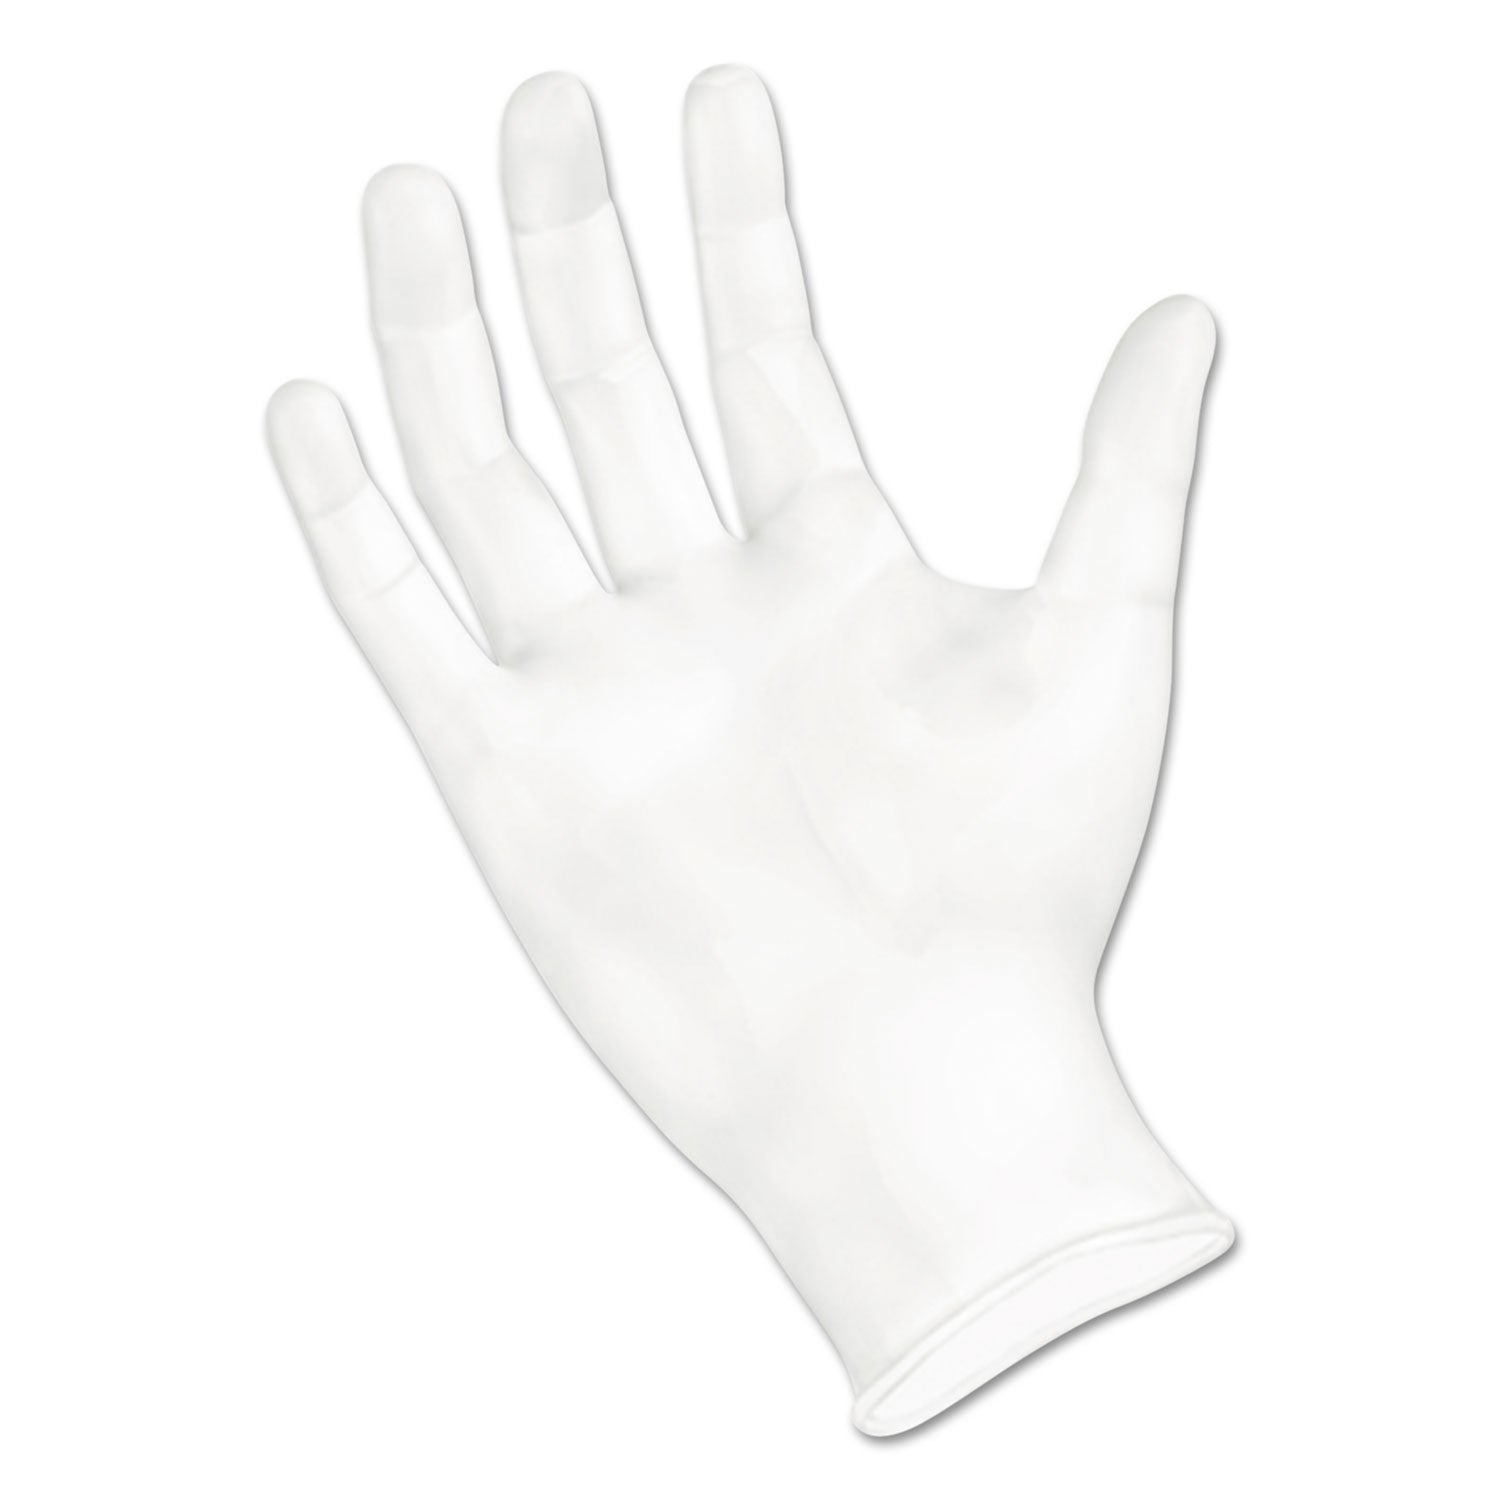 General Purpose Vinyl Gloves, Powder/Latex-Free, 2.6 mil, X-Large, Clear,100/Box - 